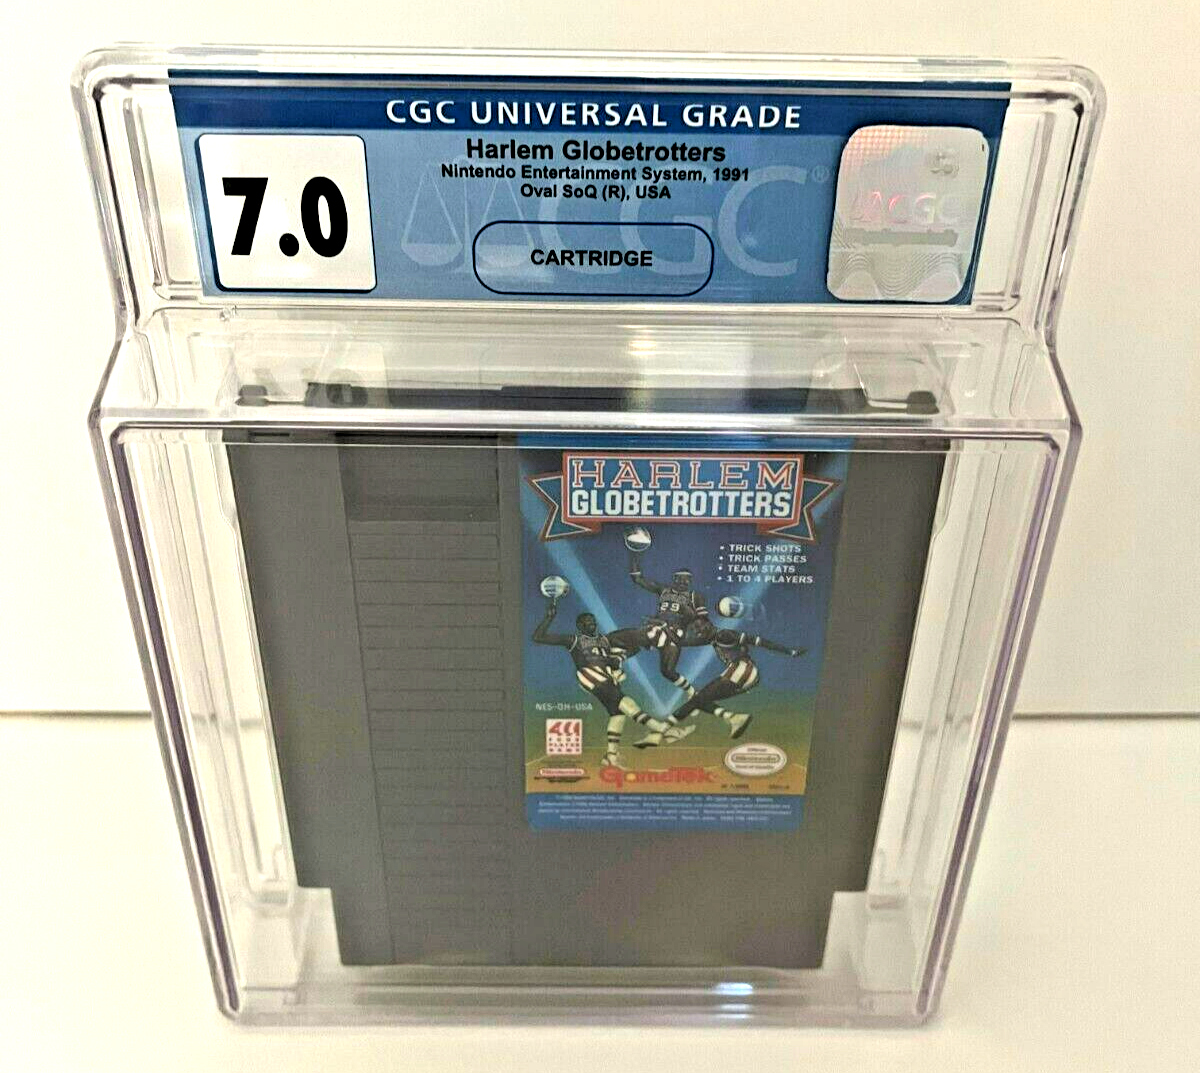 Harlem Globetrotters Basketball Nintendo NES (1991) Cartridge CGC 7.0 - 643-collectibles